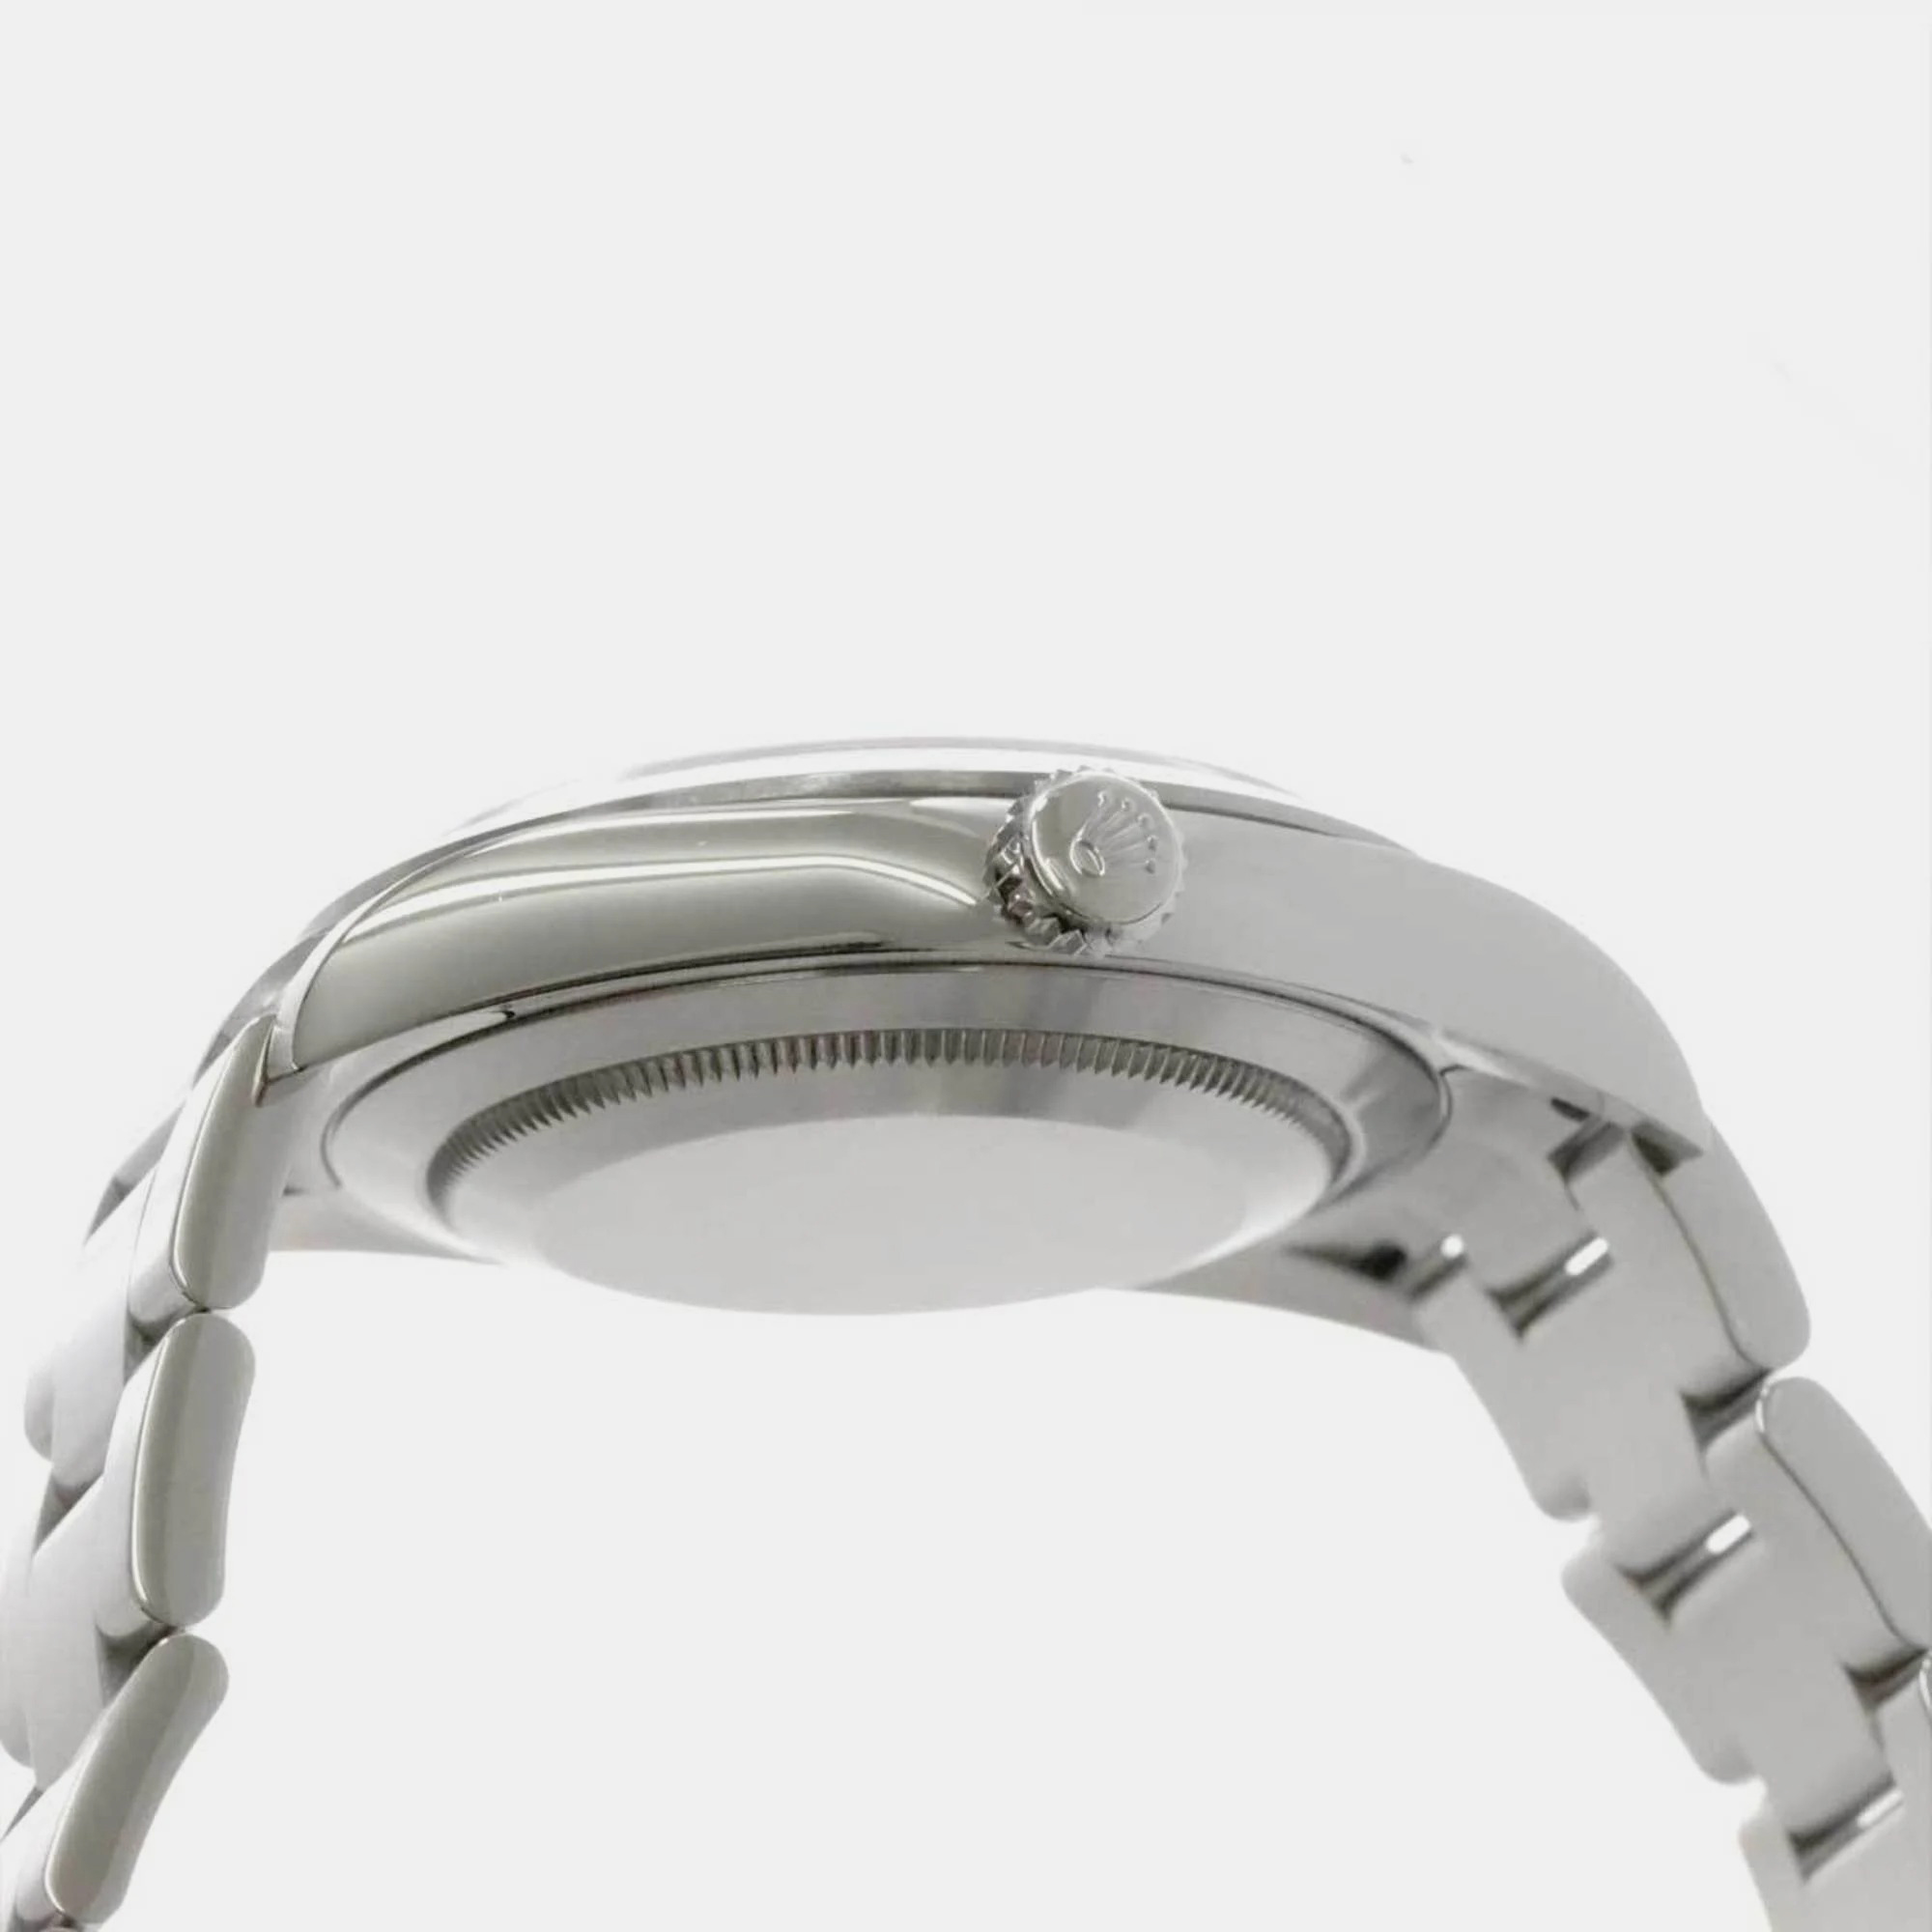 Rolex Black Stainless Steel Explorer 214270 Automatic Men's Wristwatch 39 Mm